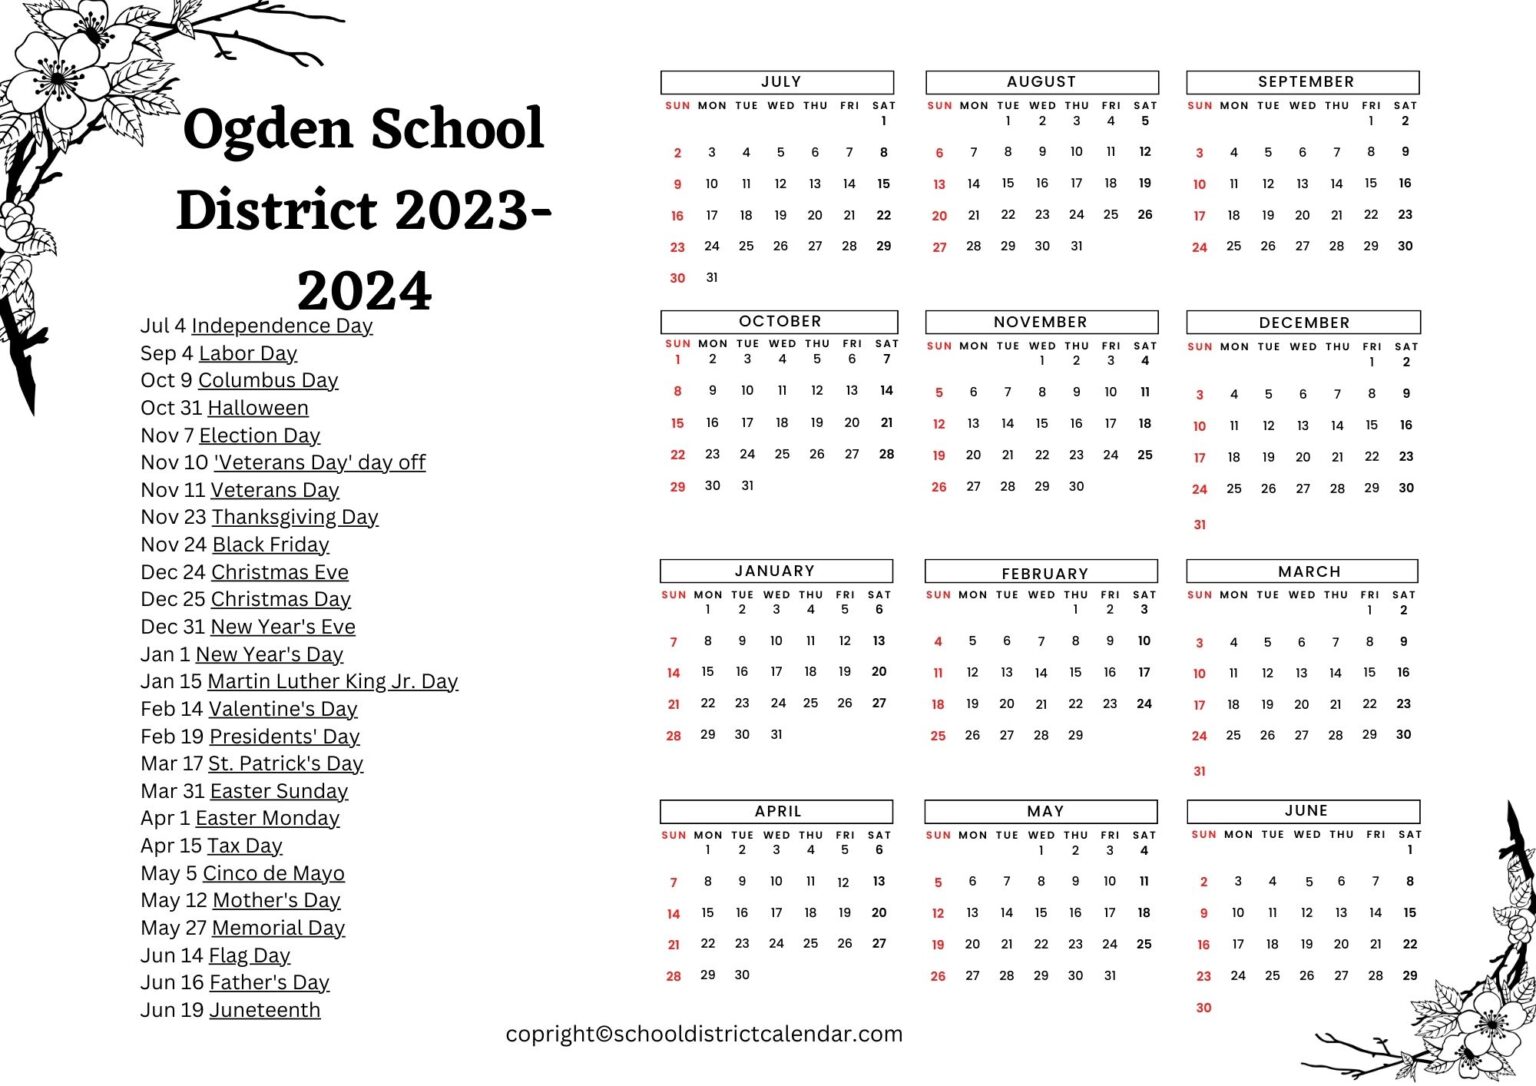 Ogden School District Calendar Holidays 20232024